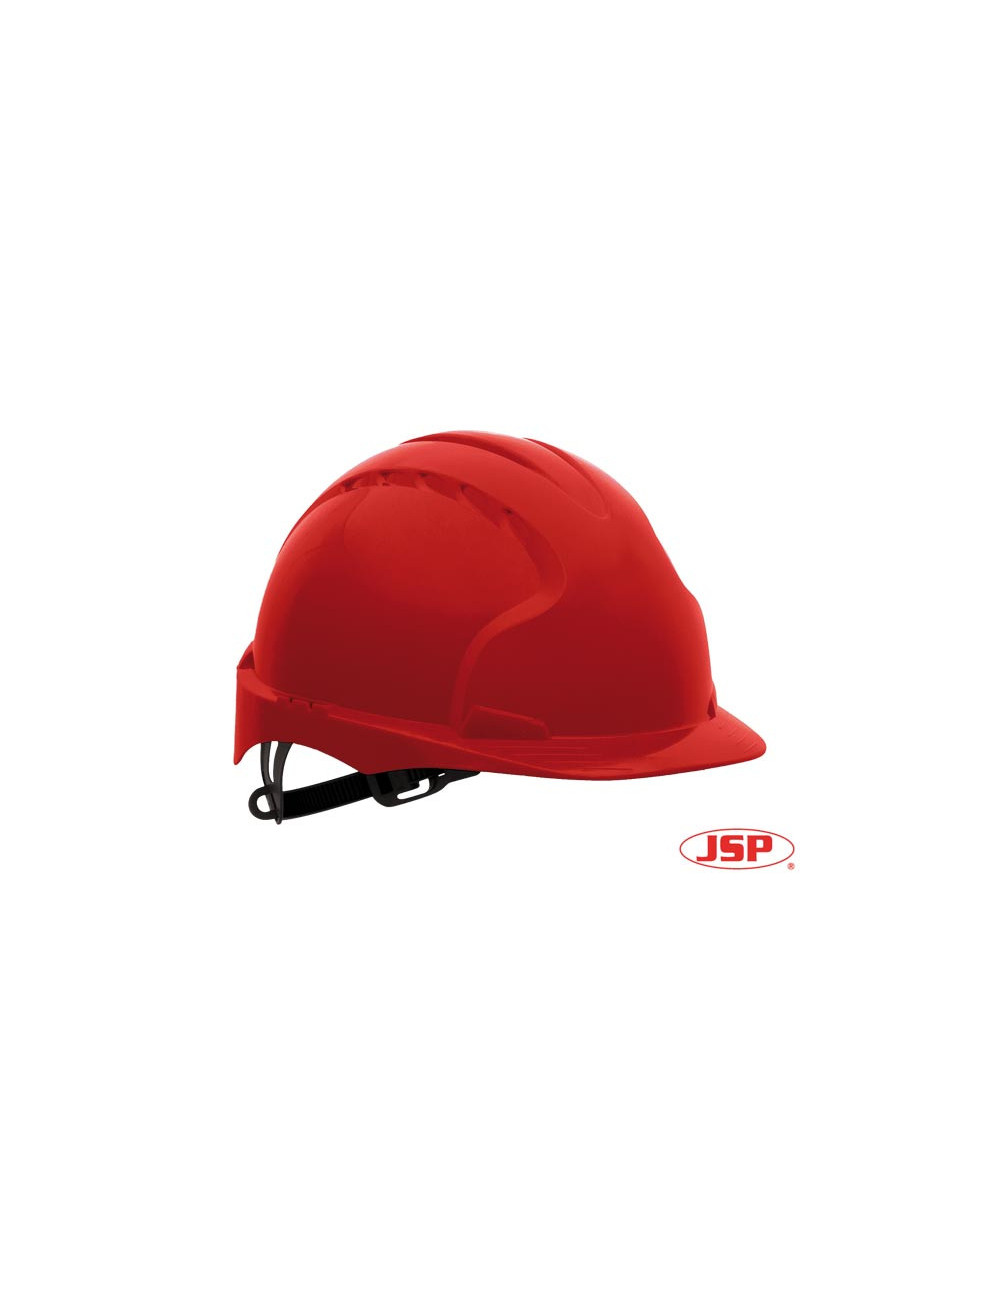 Protective helmet kas-evo3 c red Jsp